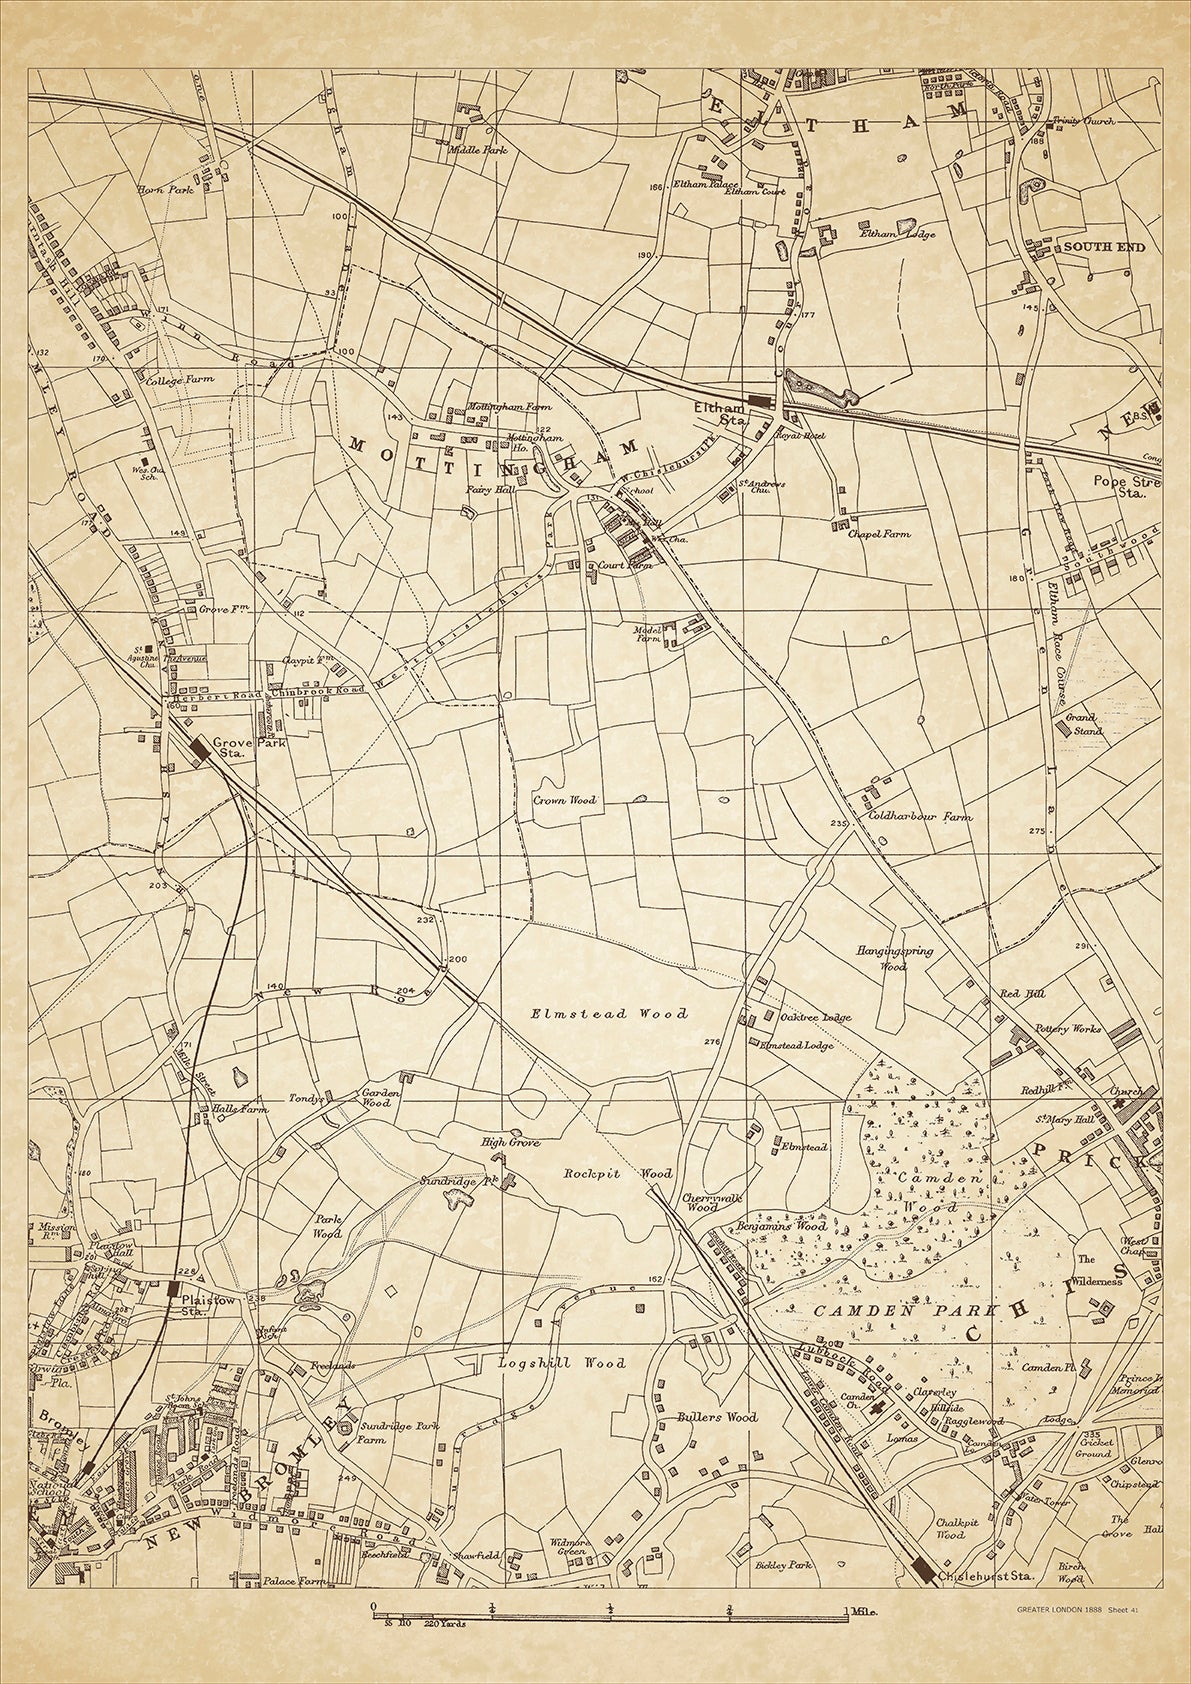 Greater London in 1888 Series - showing Mottingham, Bromley (northeast), New Bromley, Camden Park, Chislehurst (west), Eltham (south) - sheet 41